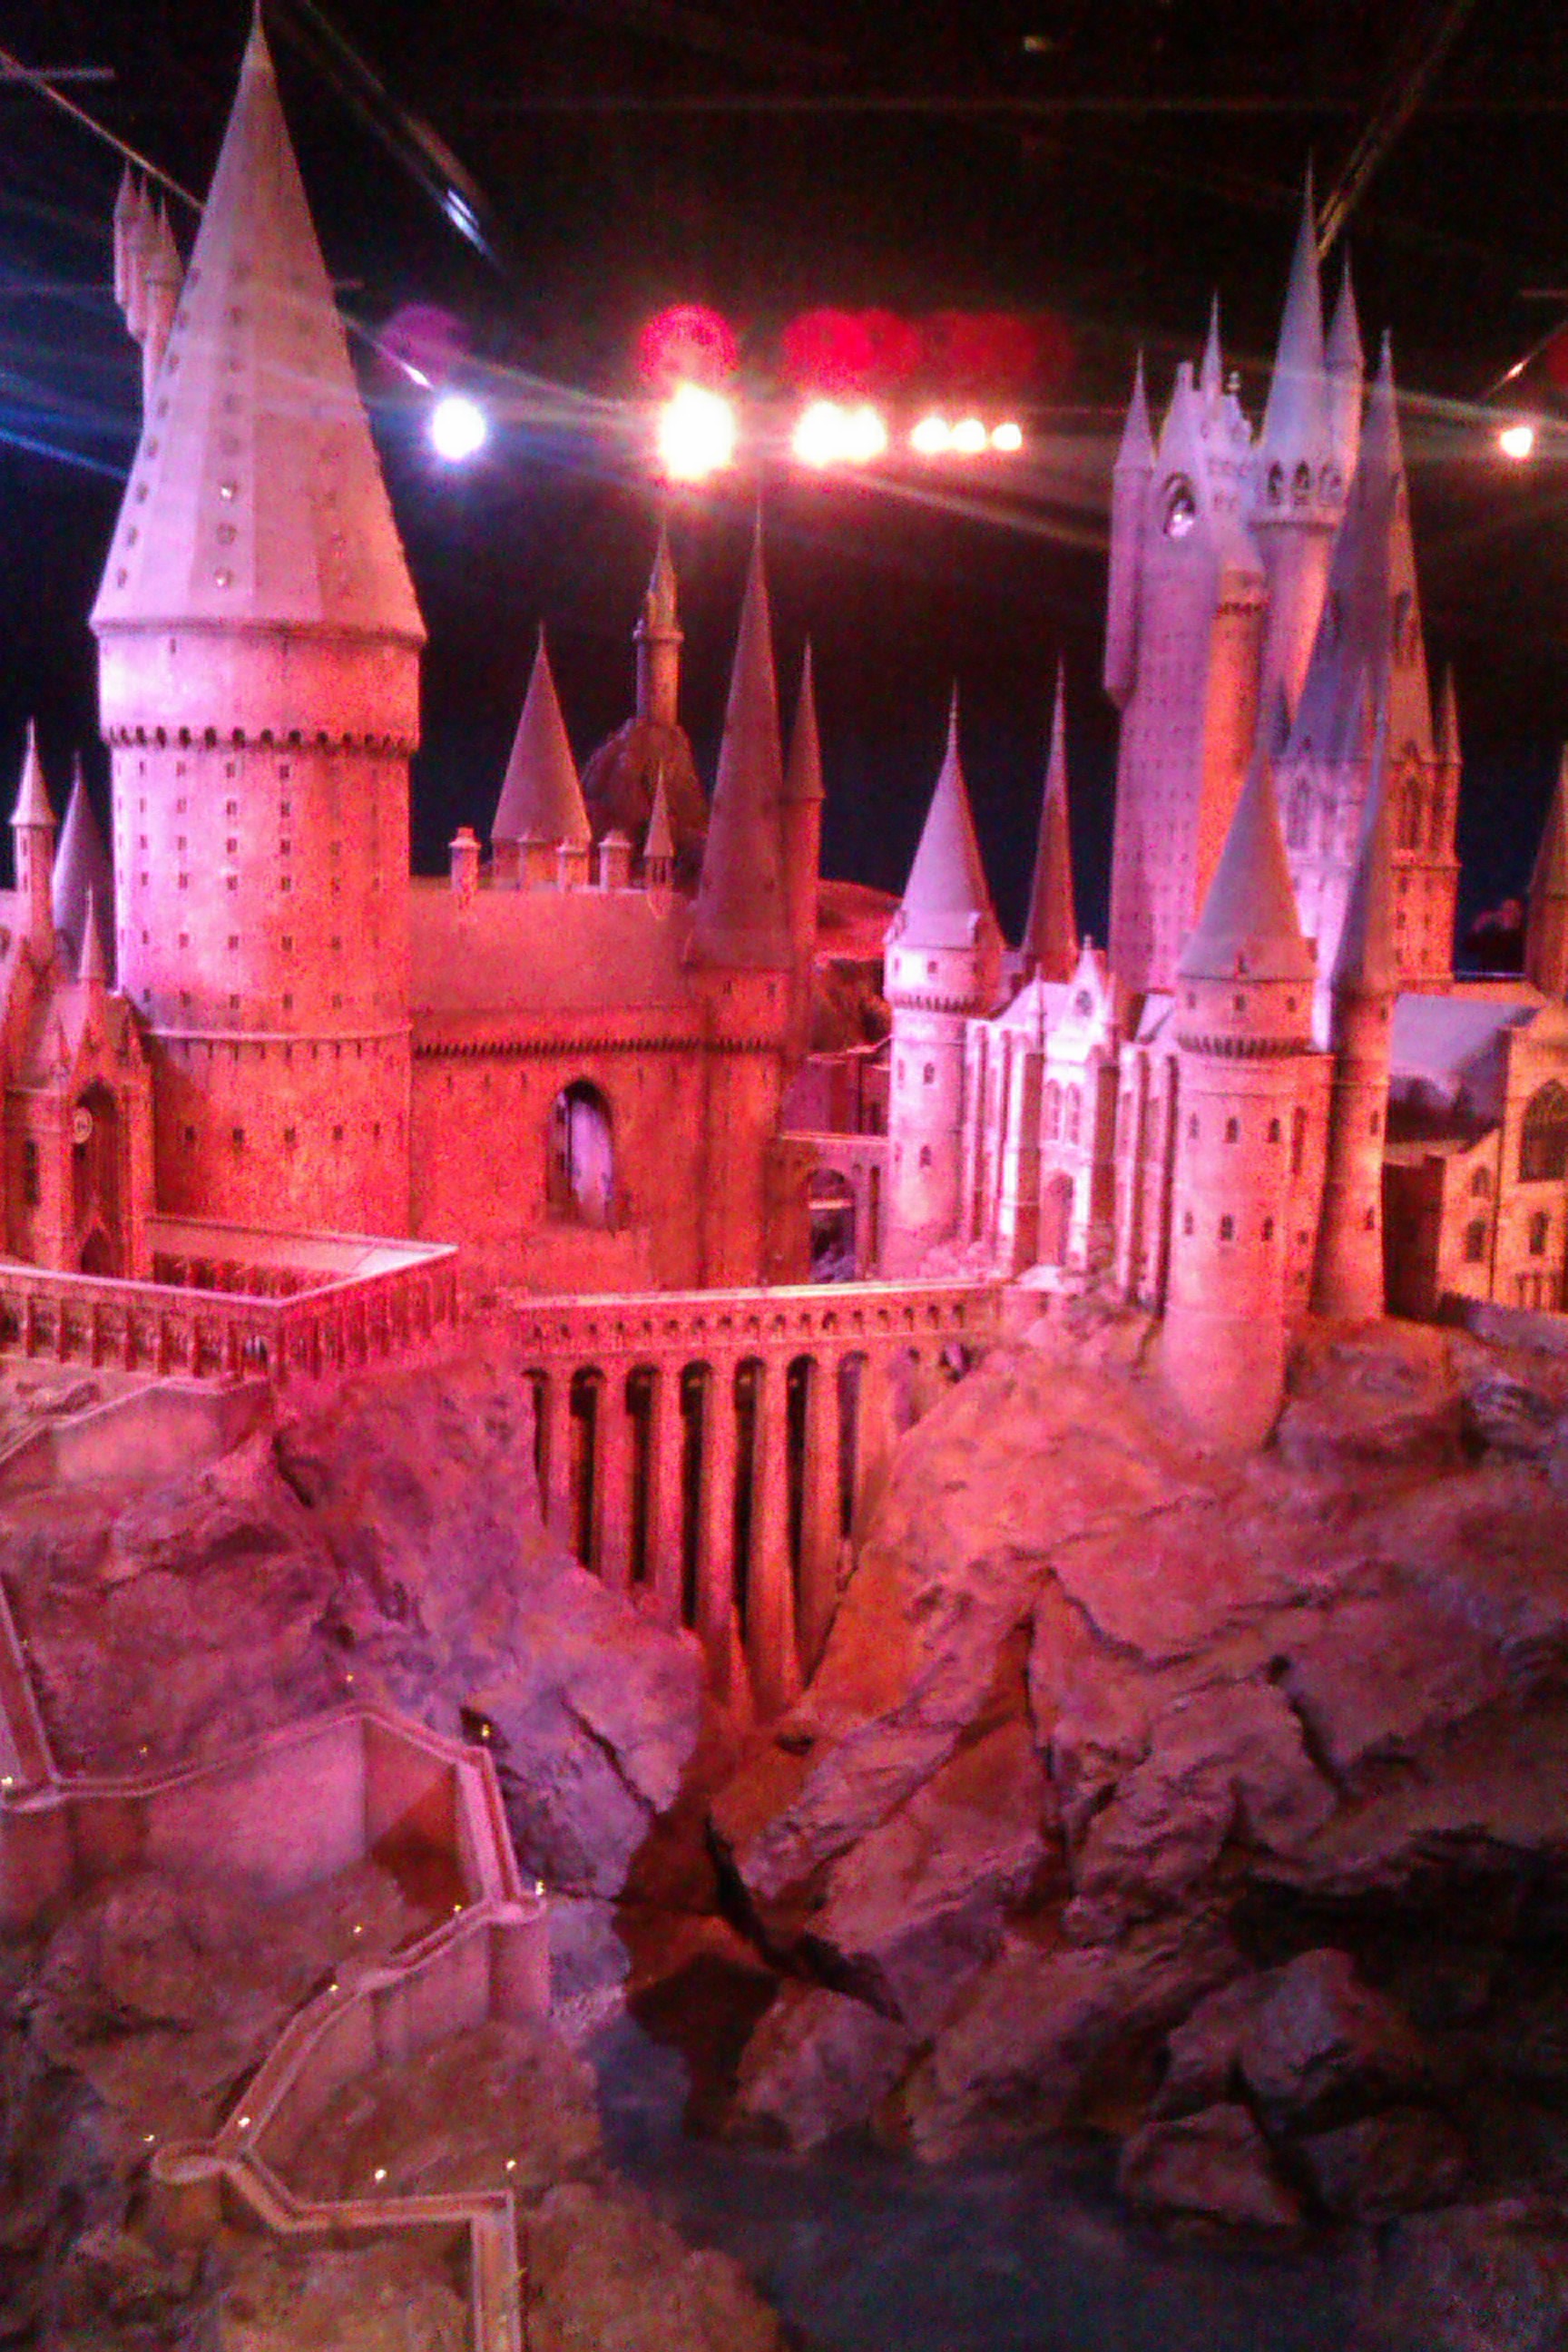 Model of Hogwarts